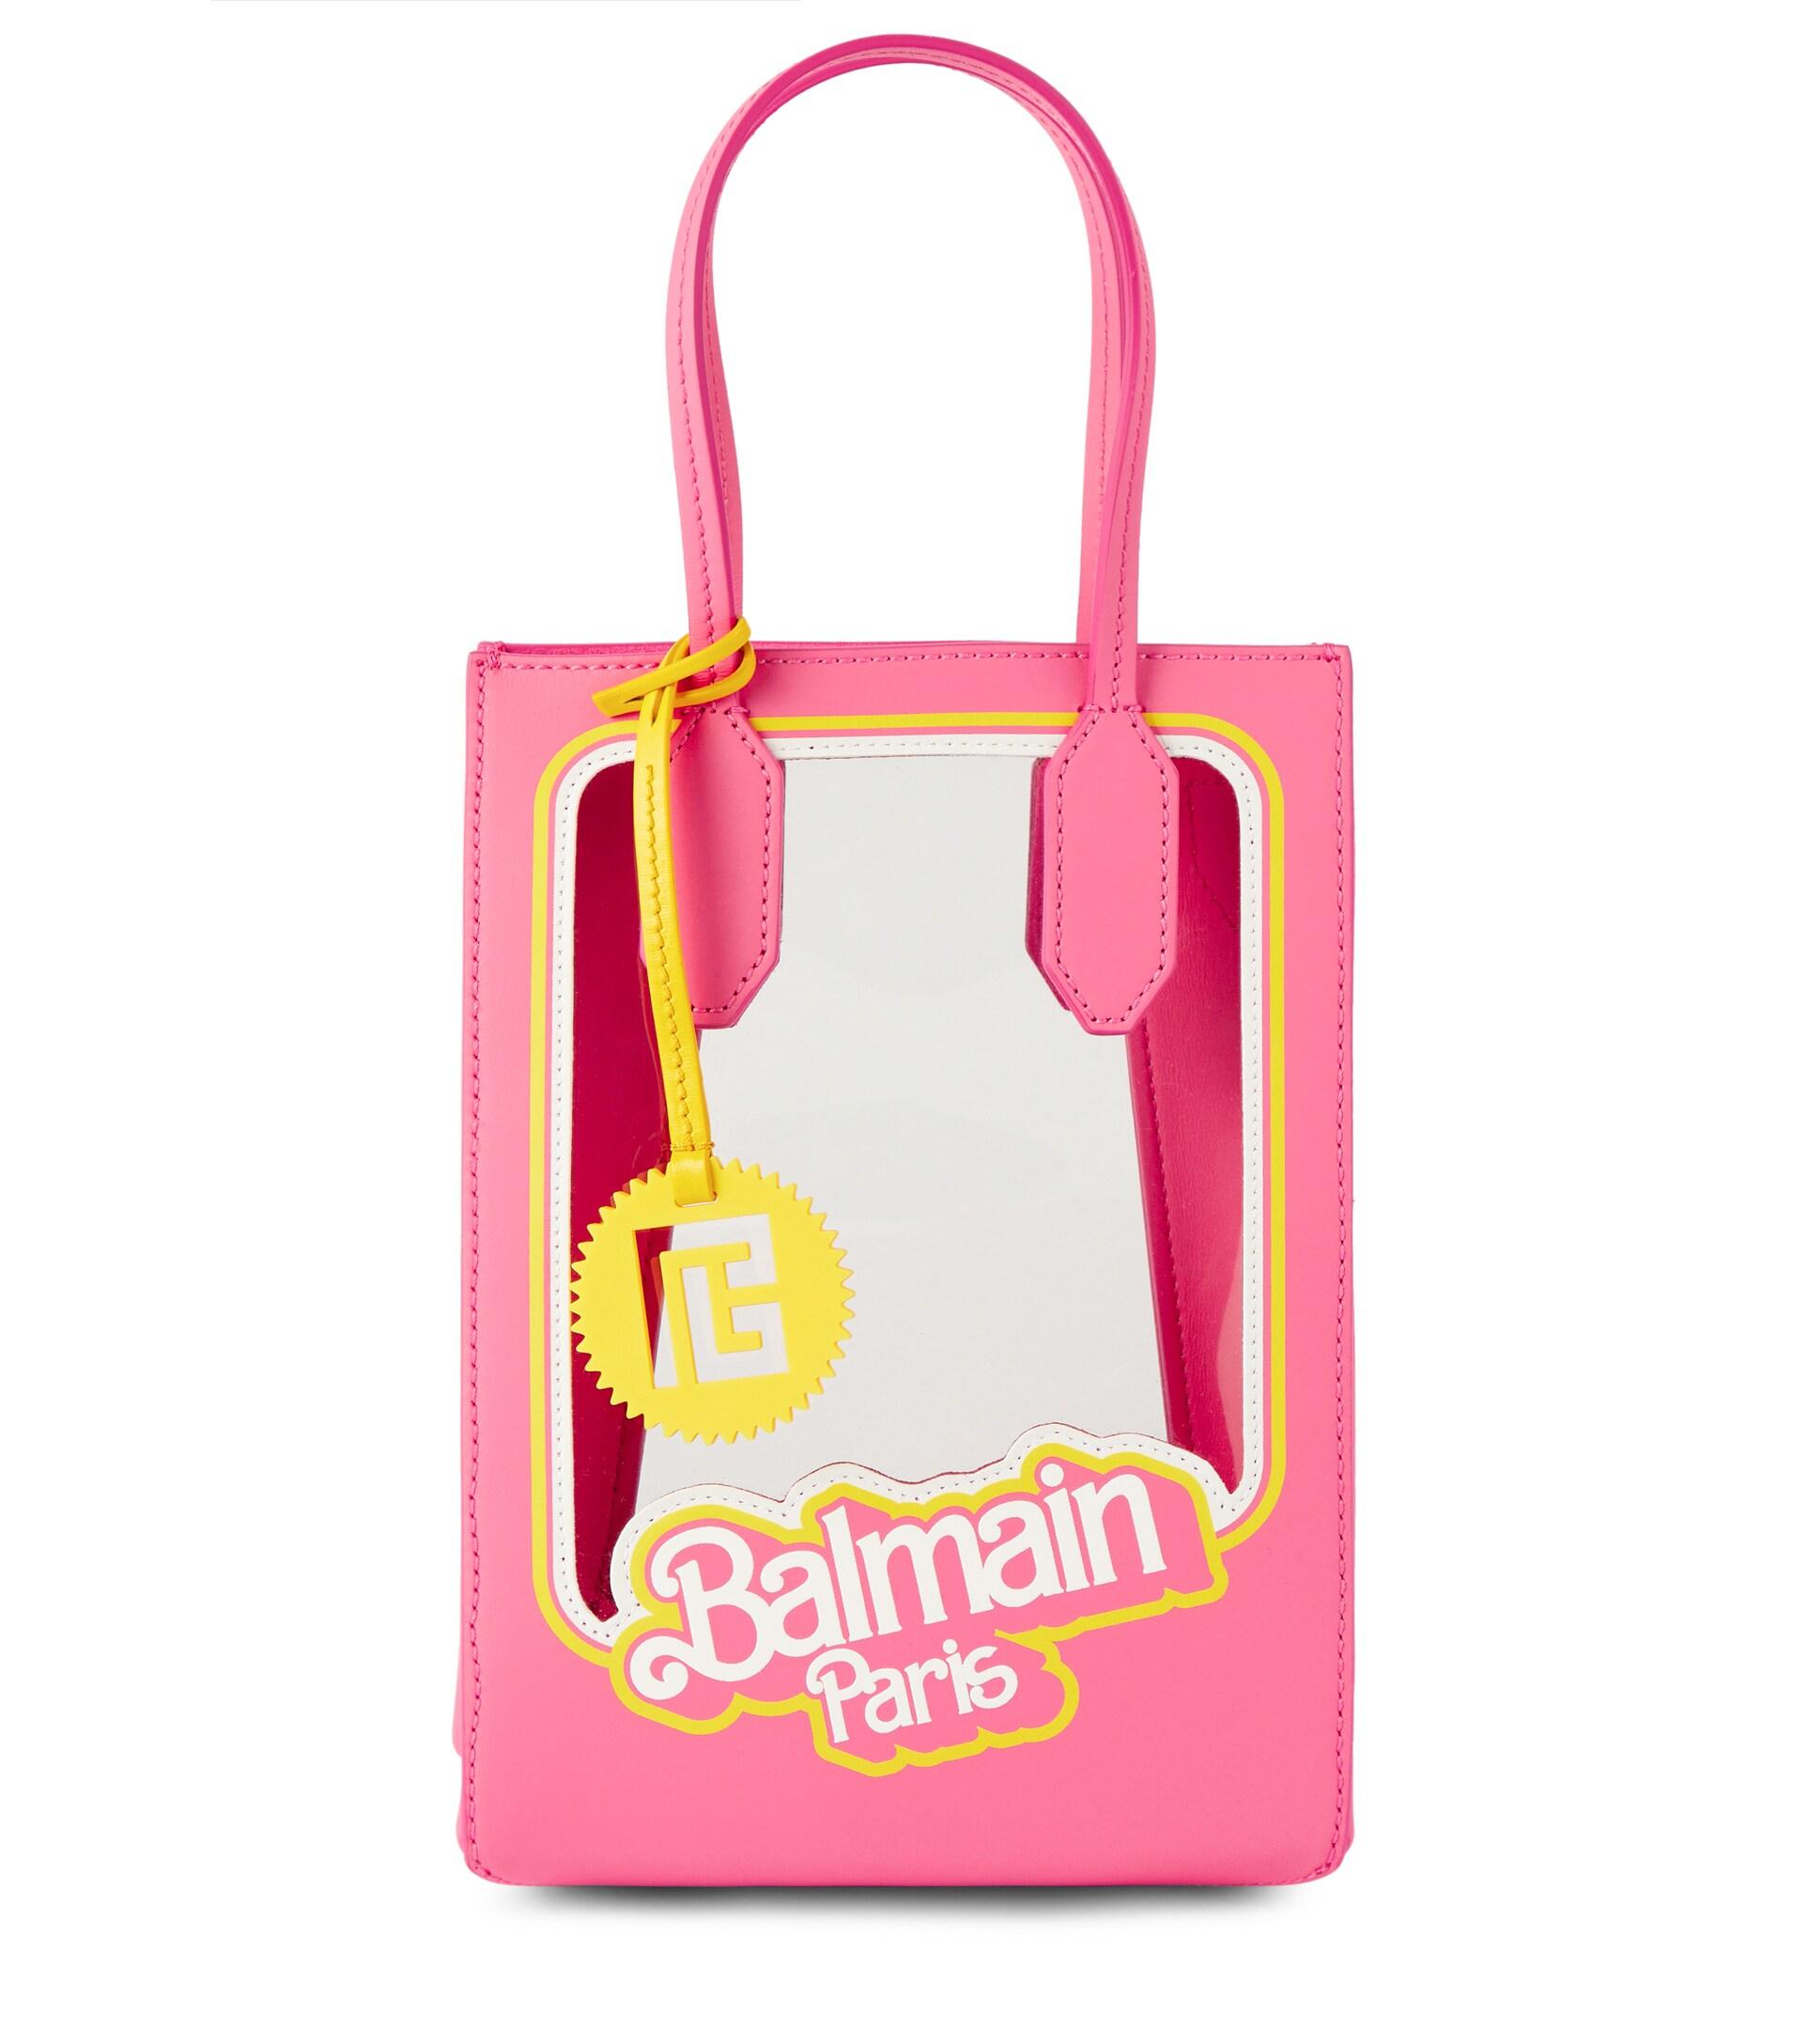 Womens Balmain Bags Black Clearance Outlet - Balmain Discount Online Shop